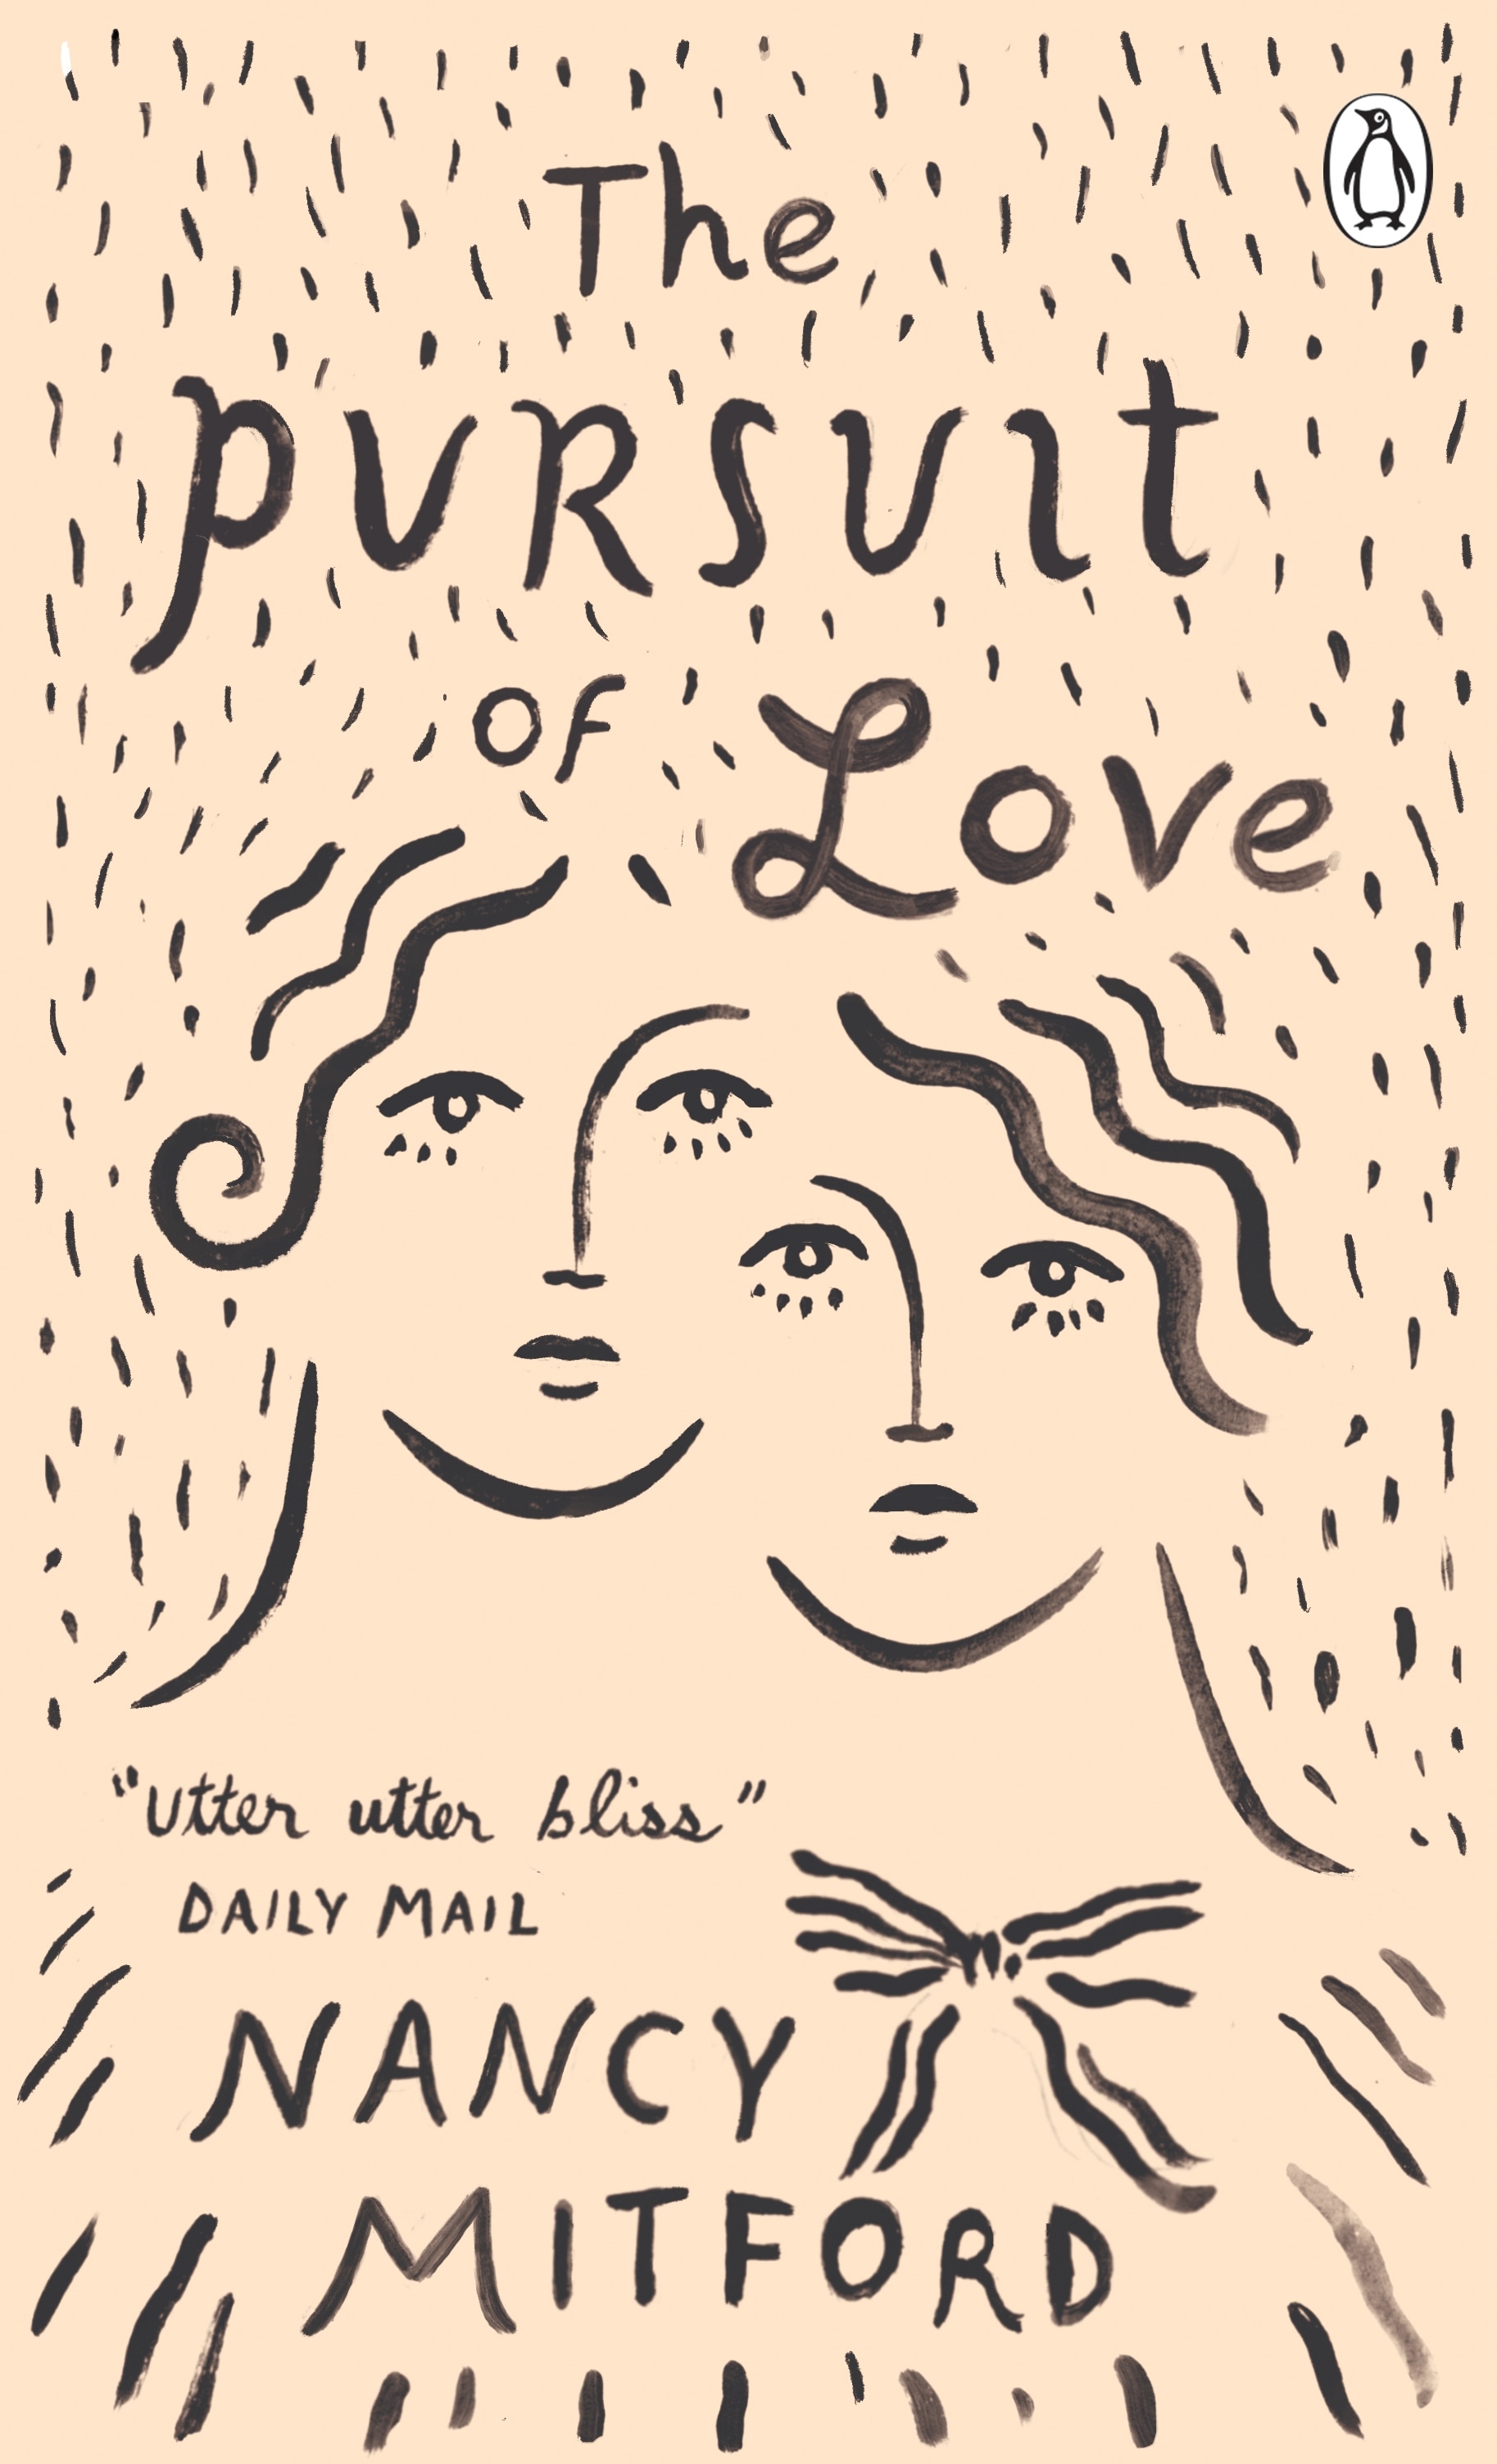 Book “The Pursuit of Love” by Nancy Mitford, Zoë Heller — June 7, 2018